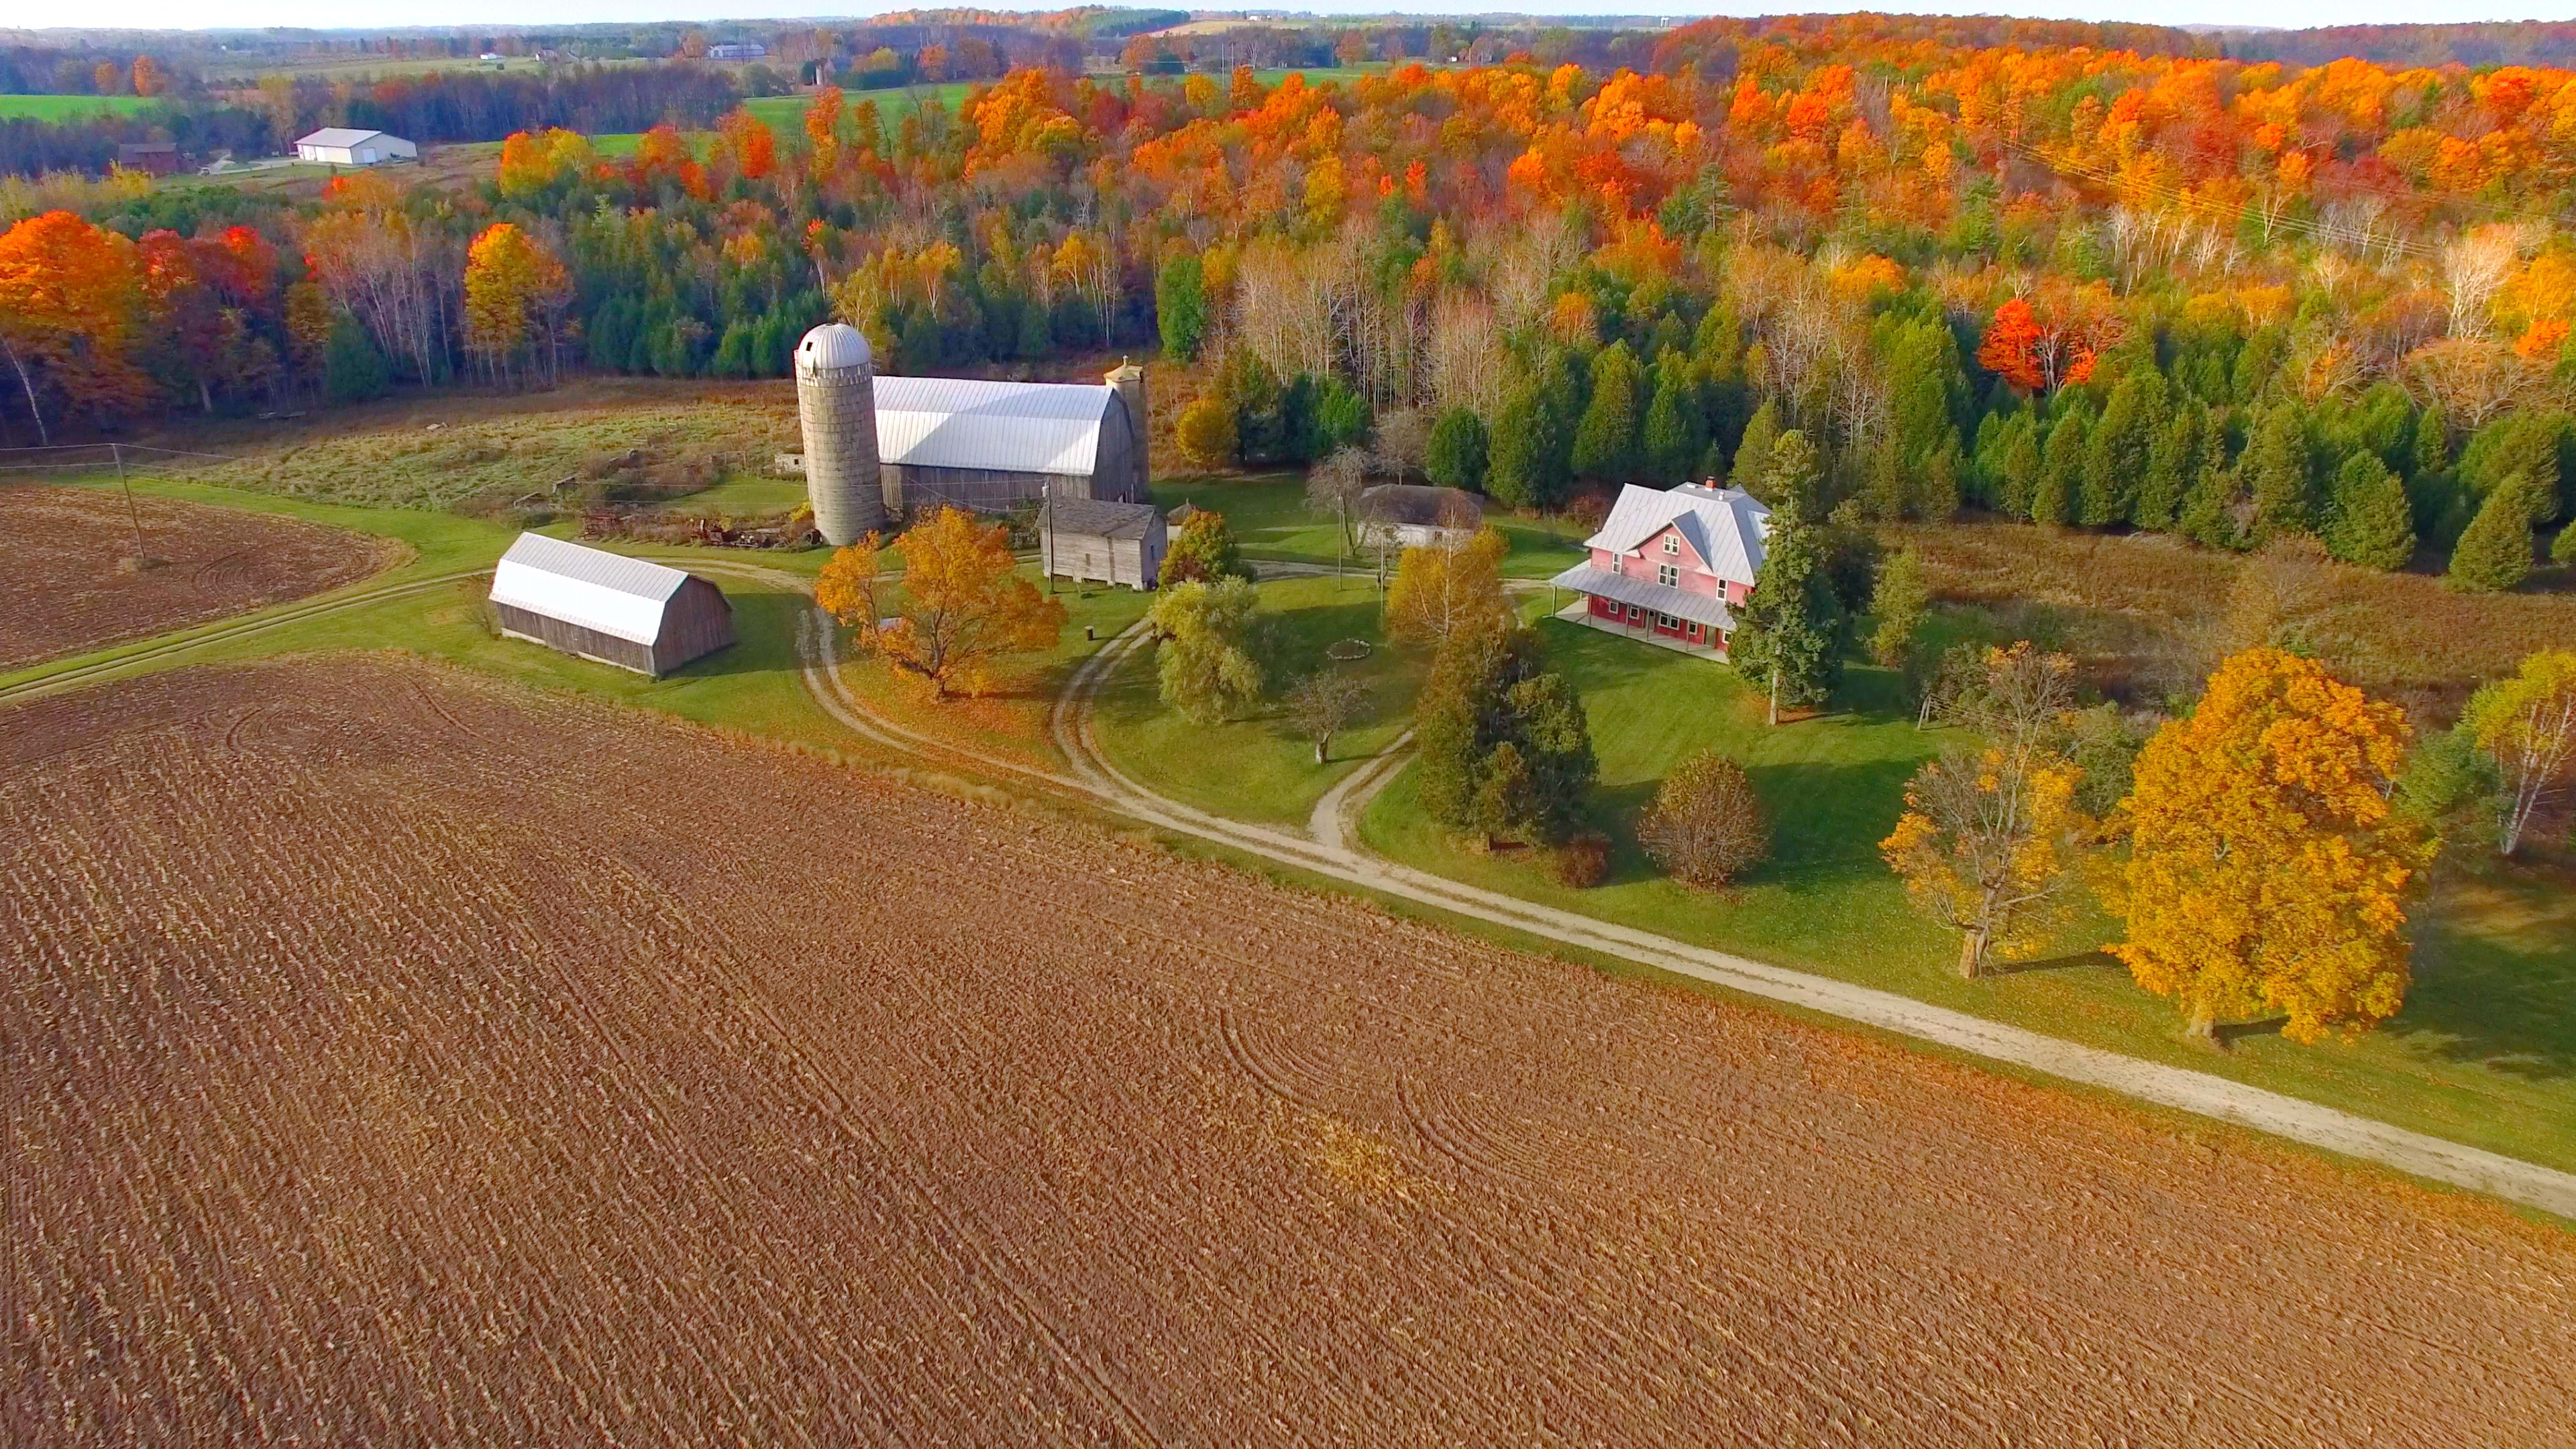 Colorful Autumn Rural Forest and Farm Landscape